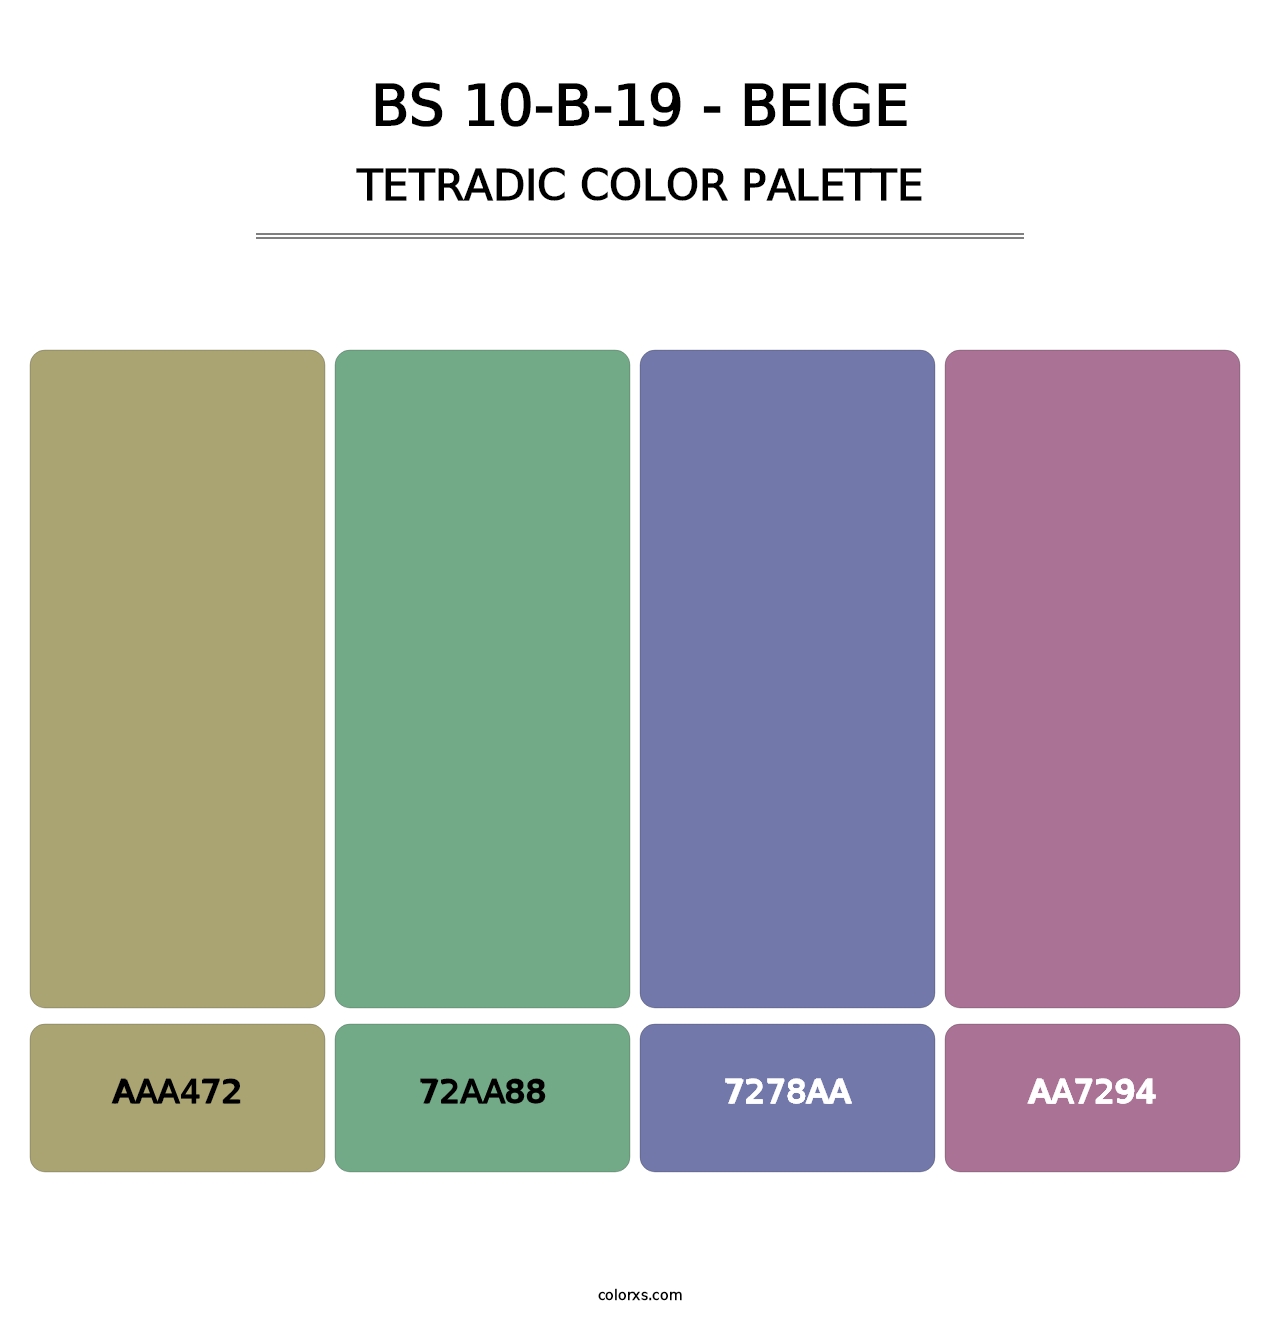 BS 10-B-19 - Beige - Tetradic Color Palette